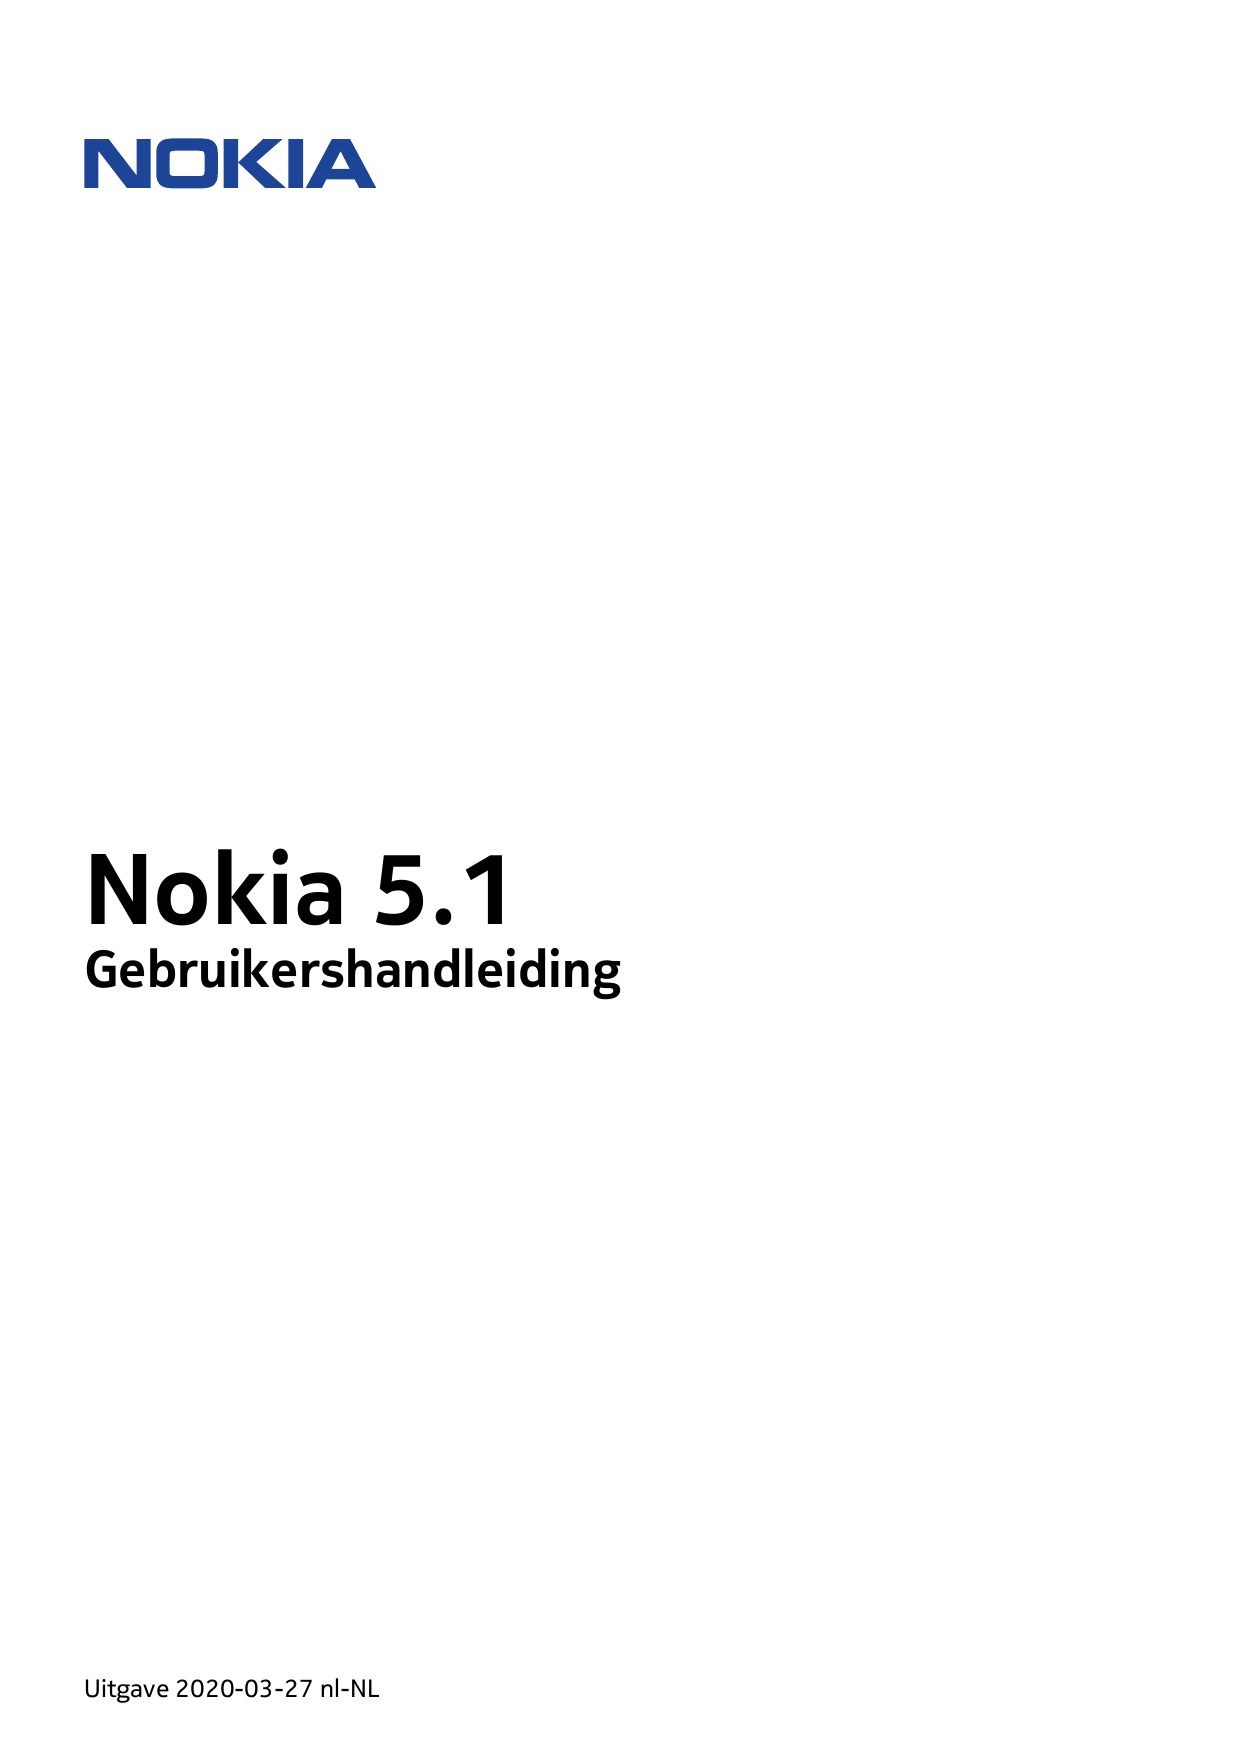 Nokia 5.1GebruikershandleidingUitgave 2020-03-27 nl-NL